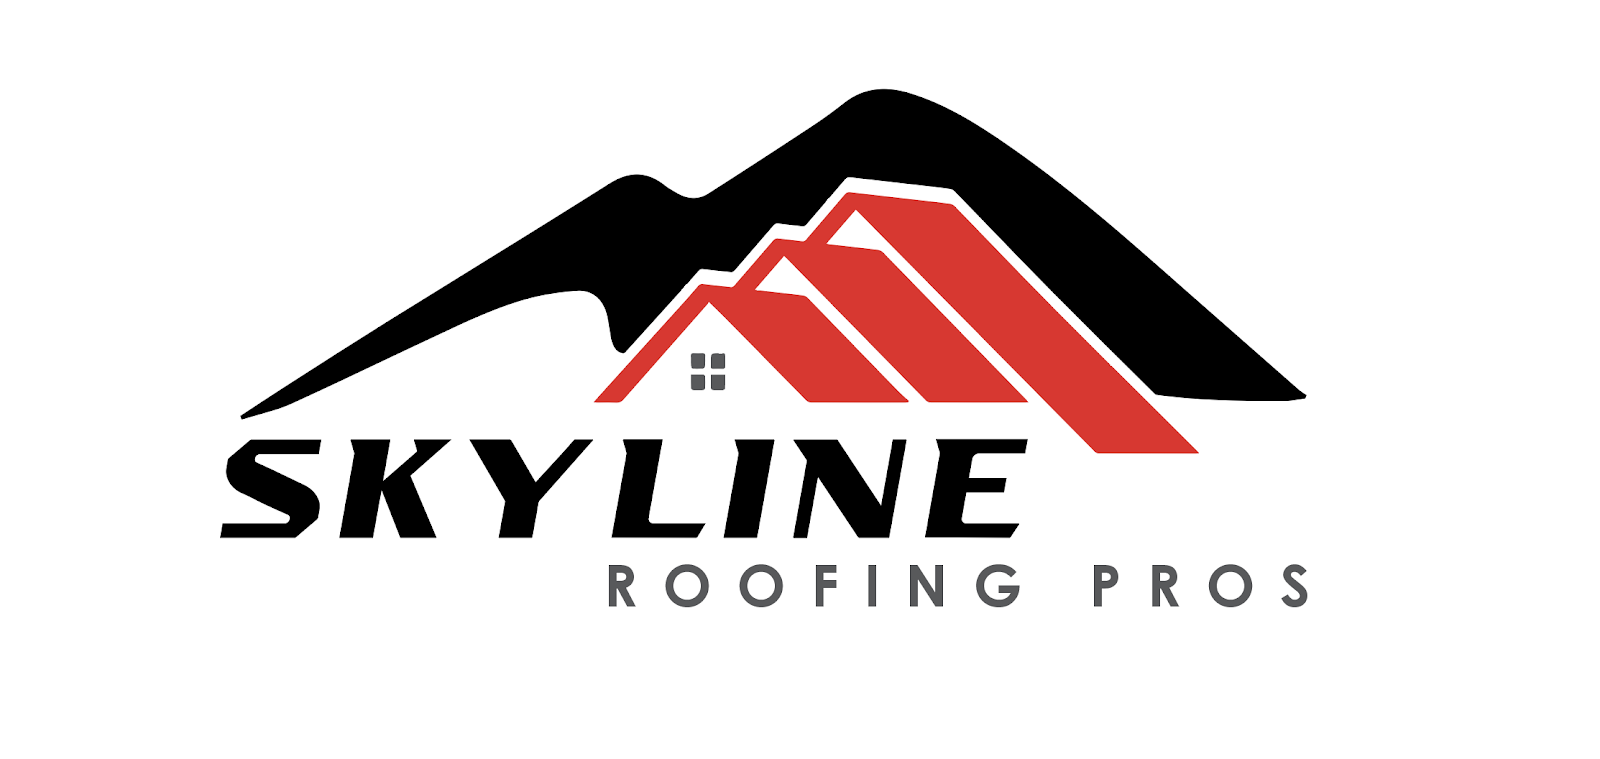 Skyline Roofing Pros 433 Fairlane Dr, Stanardsville Virginia 22973